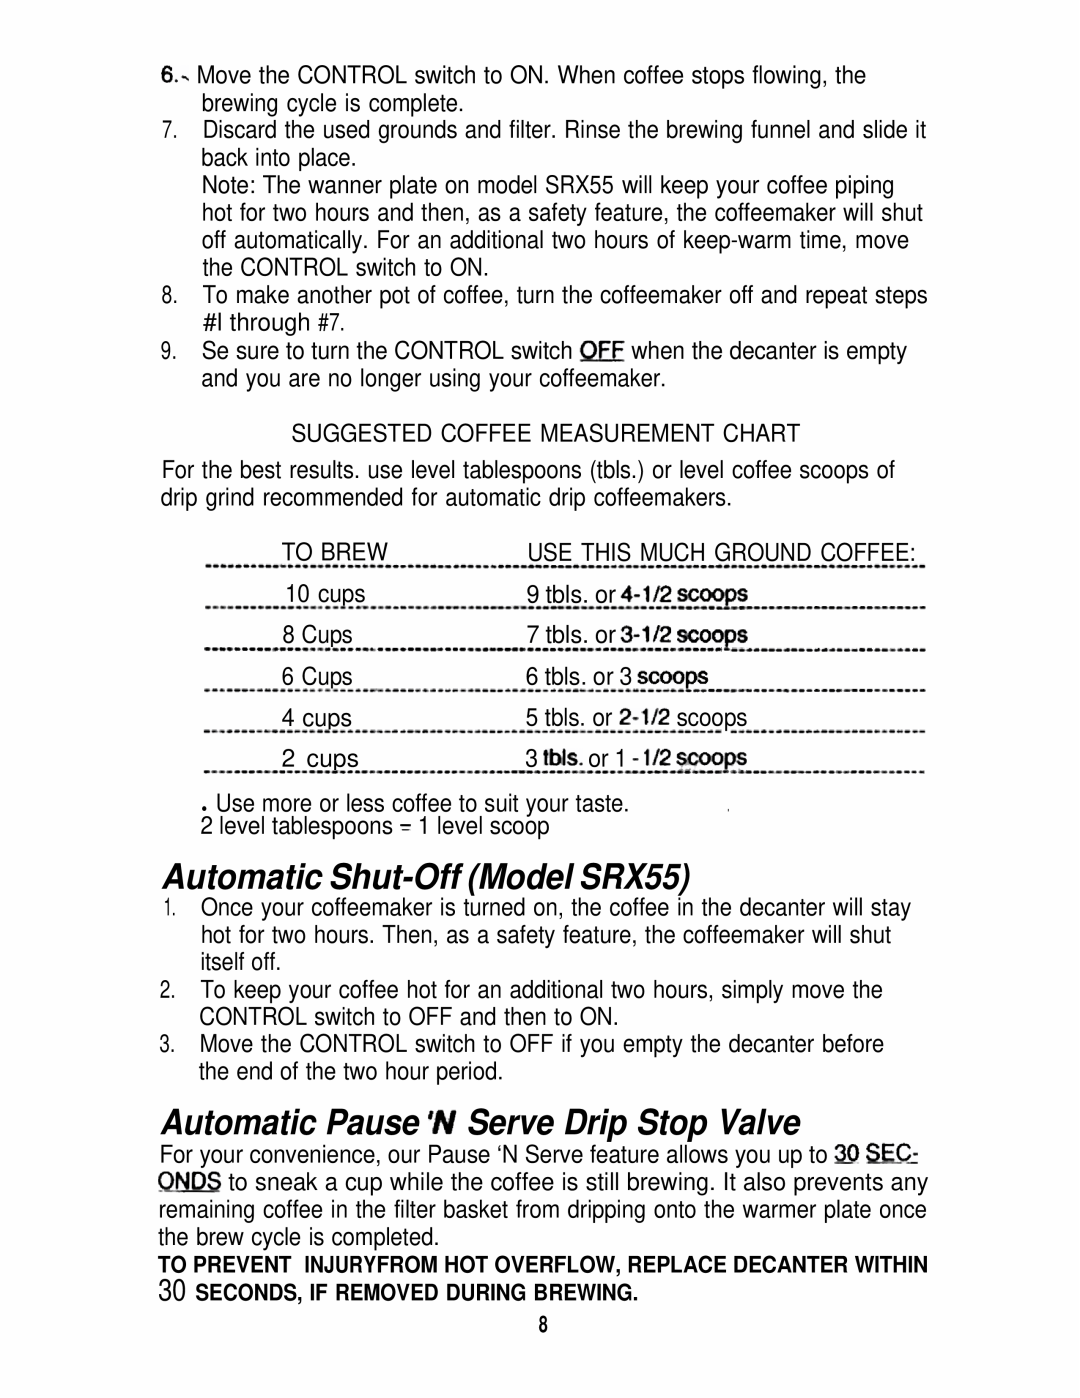 Mr. Coffee SR10 manual Automatic Shut-OffModel SRX55, Automatic Pause ‘U Serve Drip Stop Valve 